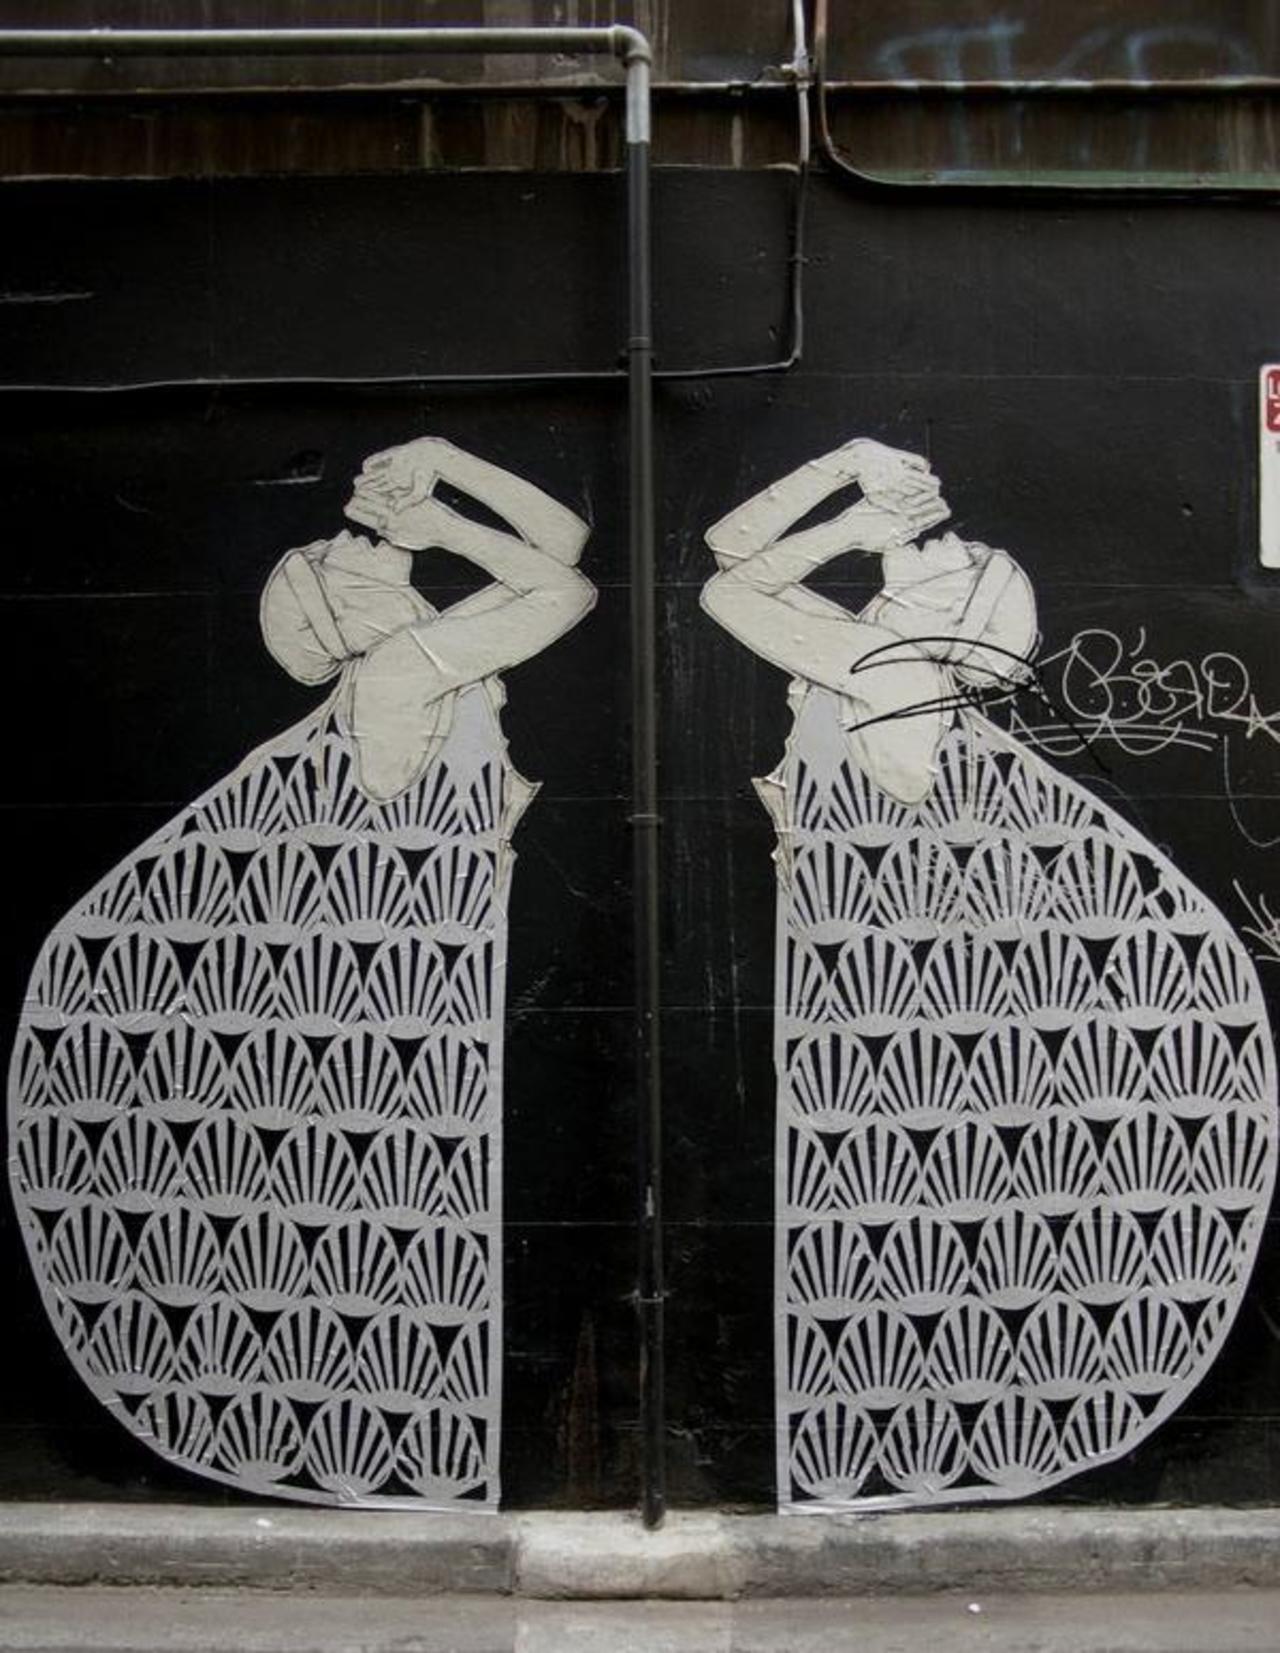 RT @BenWest: RT @lmalis: #Streetart #urbanart #graffiti #collage papier de l’artiste Miso (Stanislava Pinchuk) Melbourne
#symetrie http://t.co/M1u0Zq8wWa